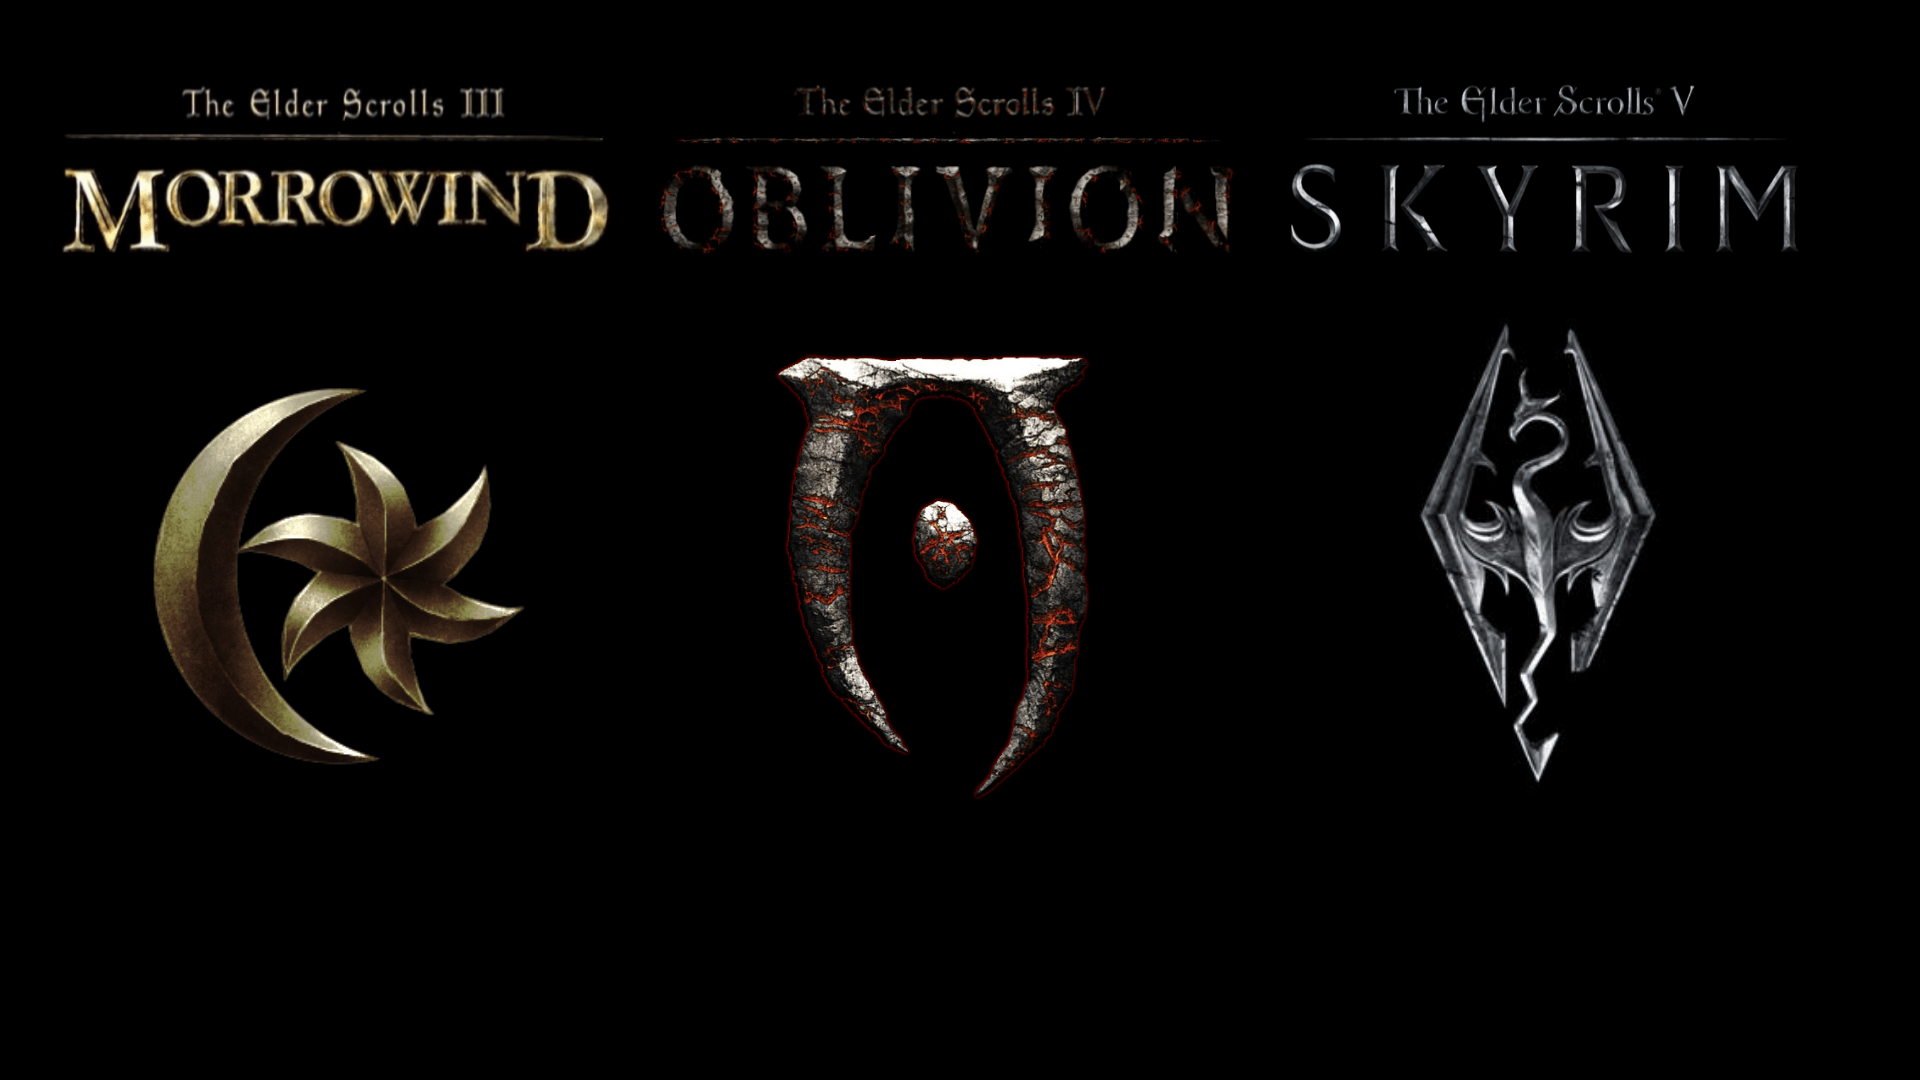 The Elder Scrolls III Morrowind IV Oblivion V Skyrim Video Games